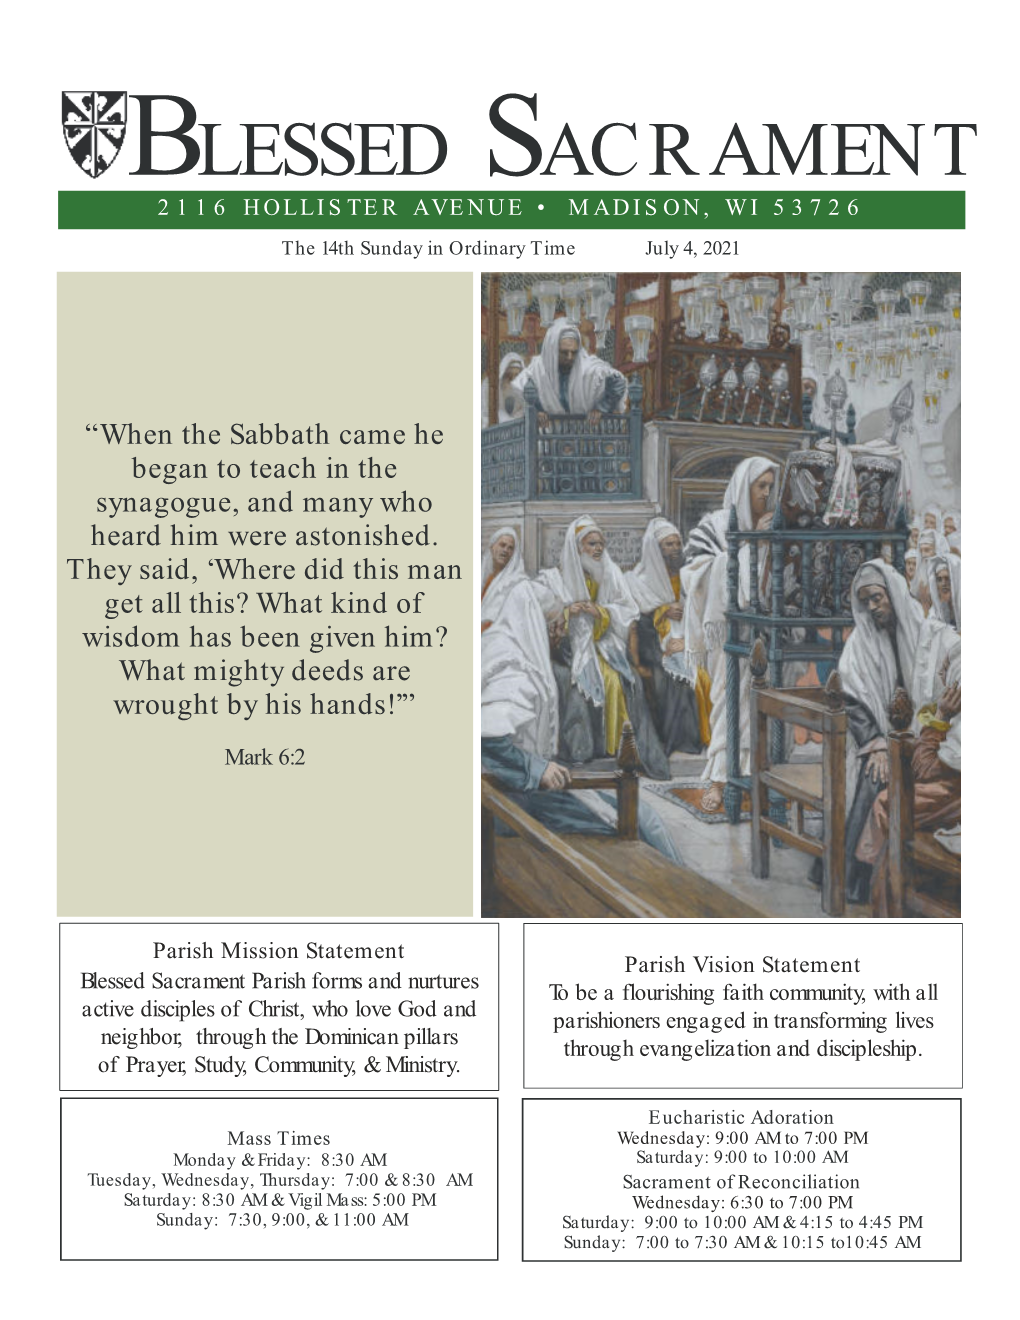 Blessed Sacrament 2116 Hollister Avenue • Madison, Wi 53726